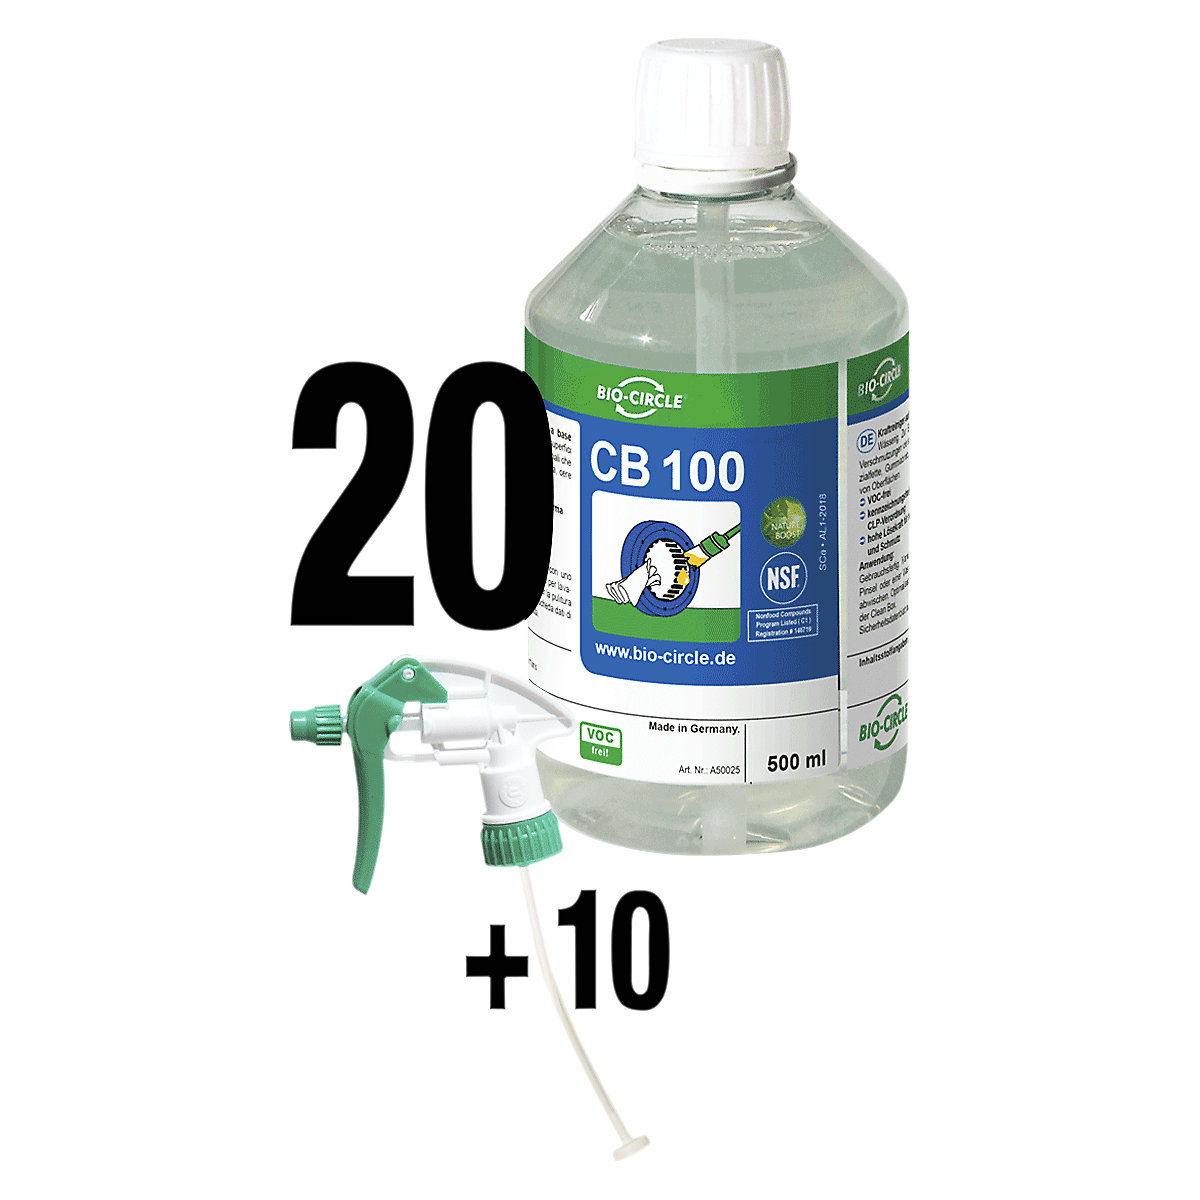 CB 100 industrial cleaner – Bio-Circle